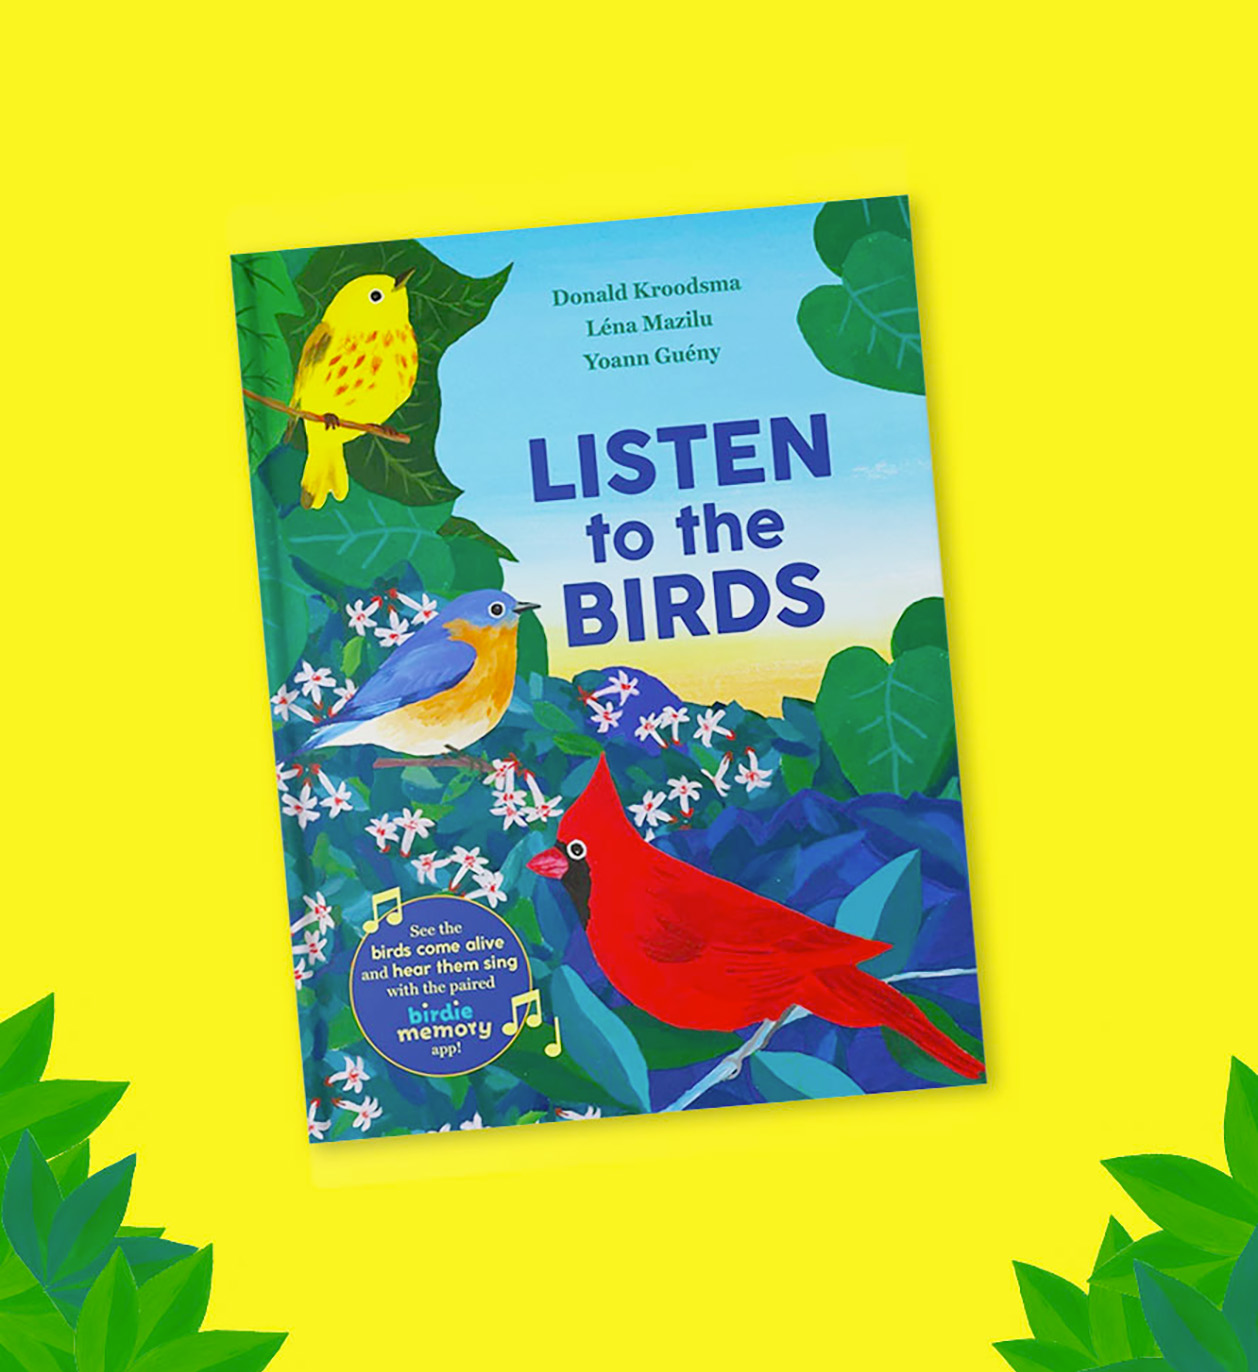 The book “Listen to the Birds”